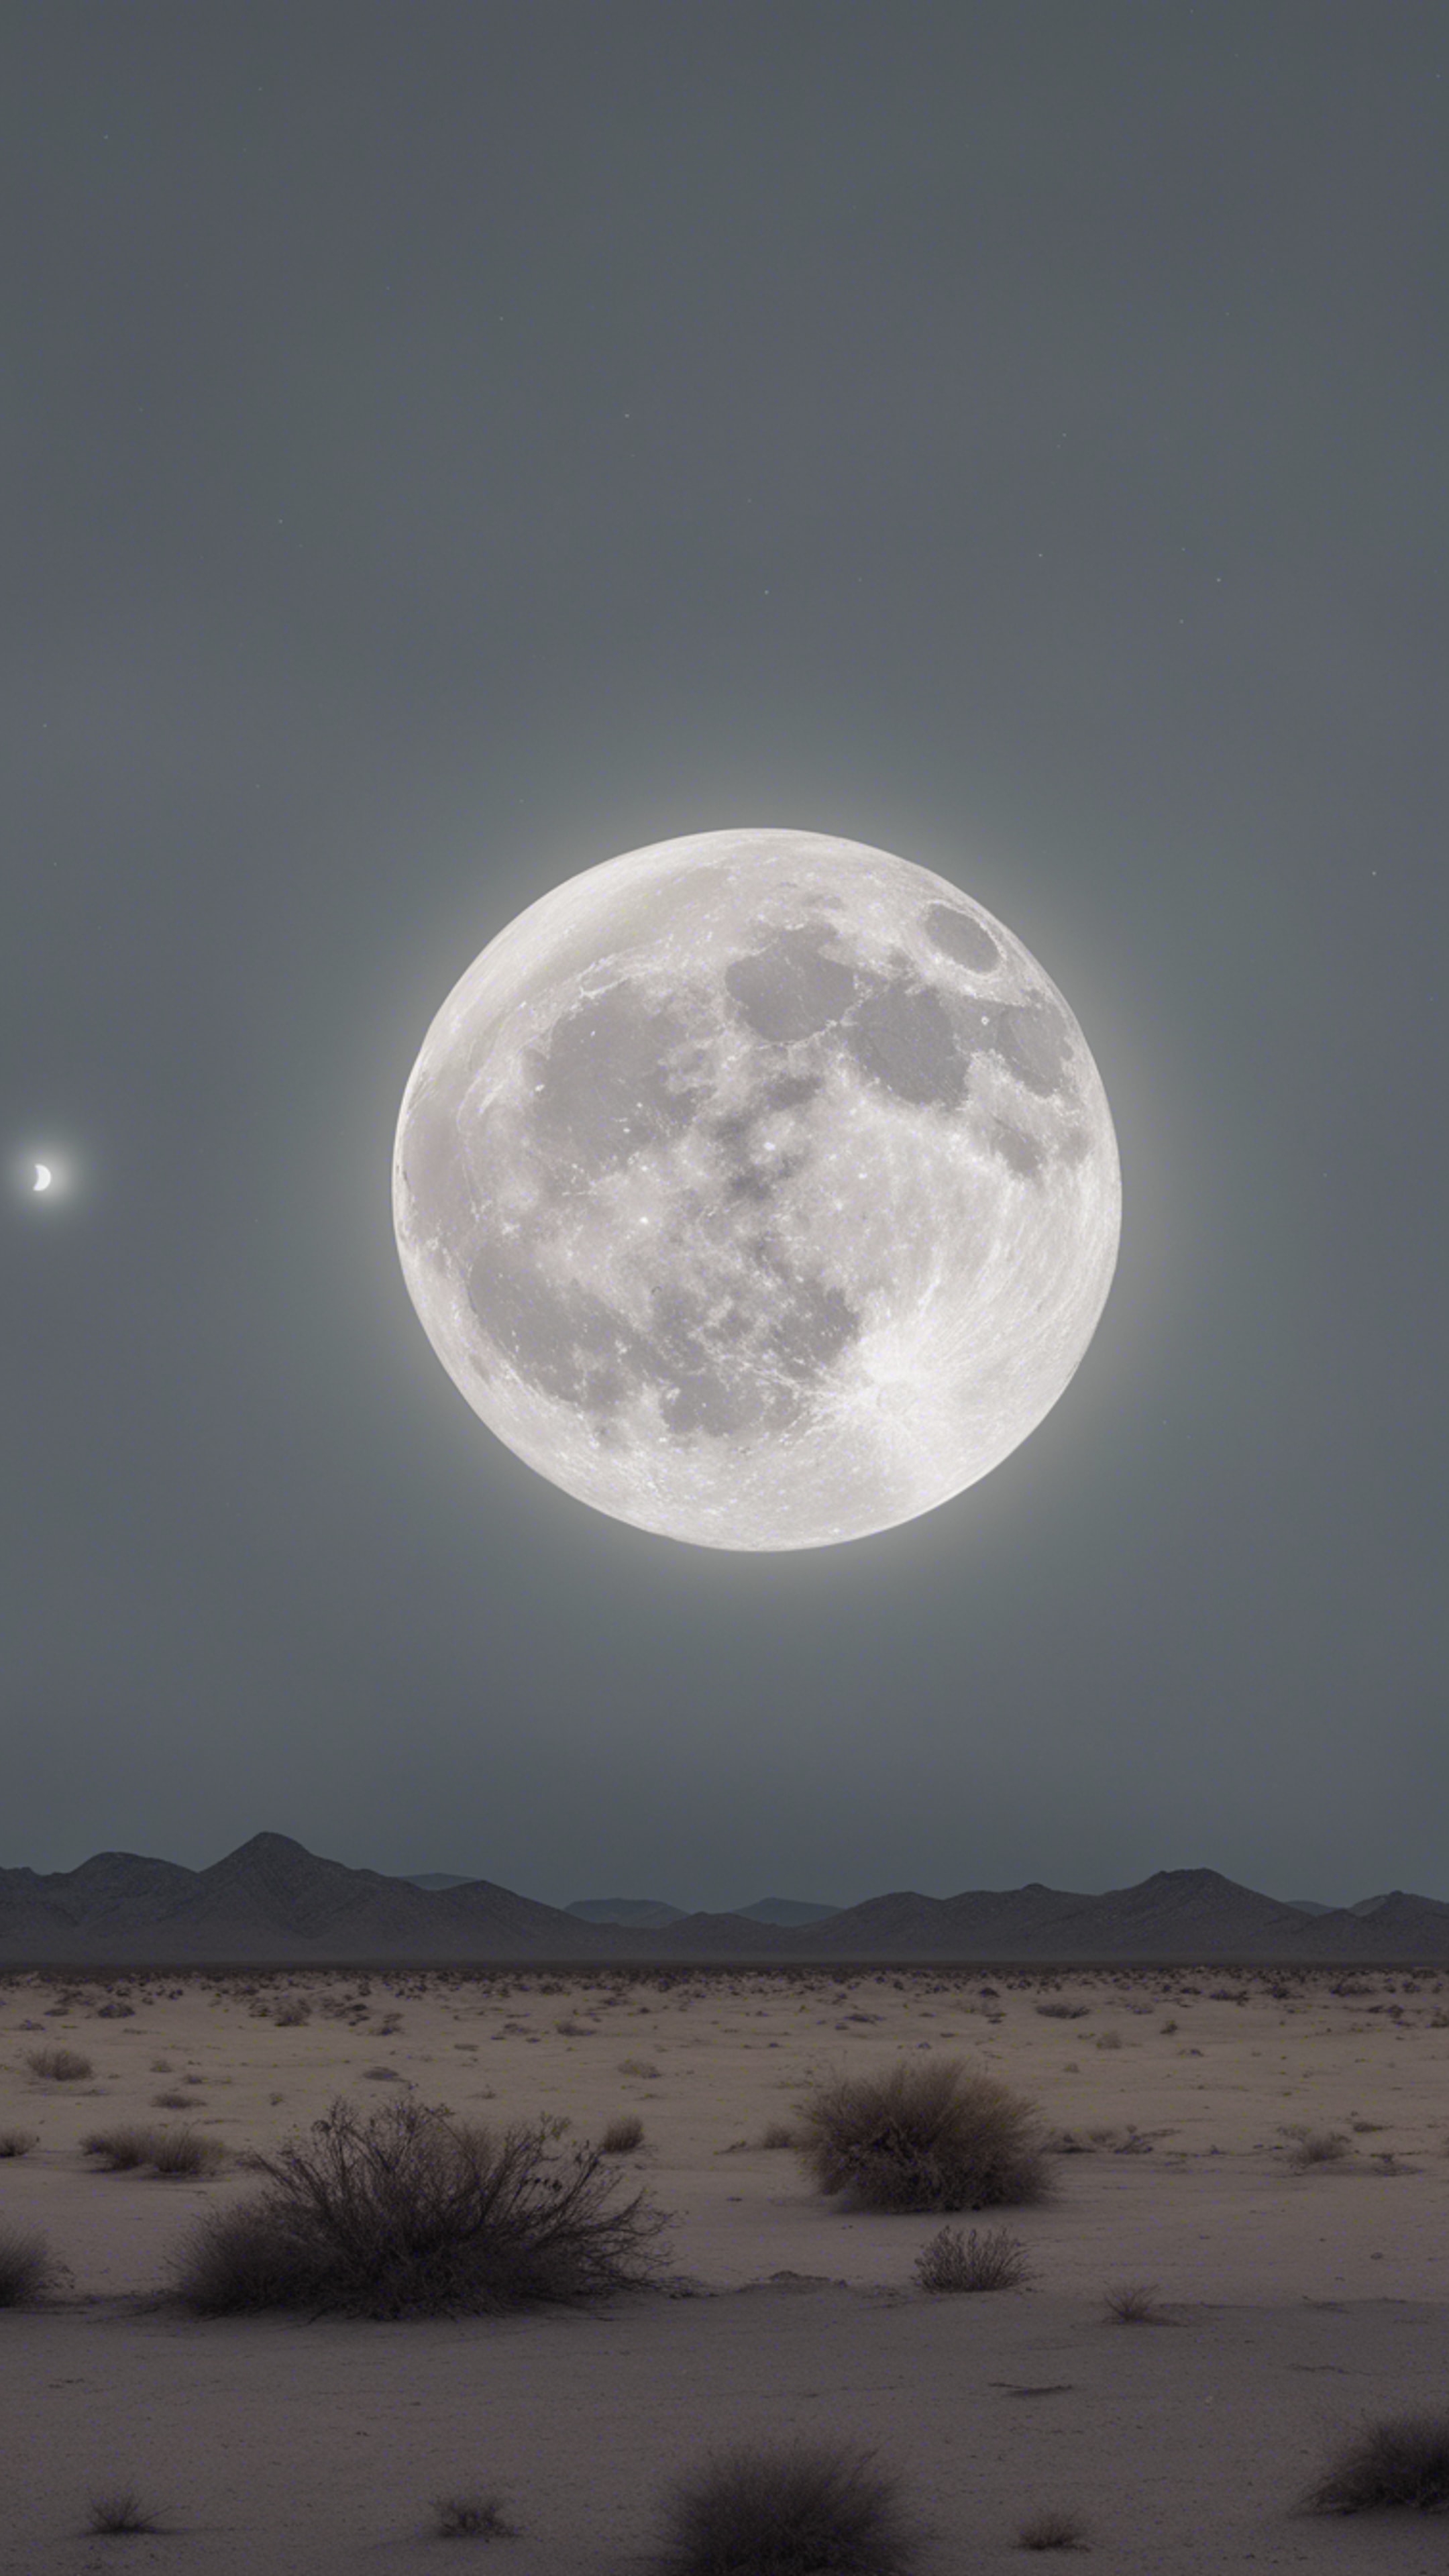 An eerie full moon casting a light gray hue over a desolate desert landscape. Tapeta[b219b4d700dc4cdd8b88]